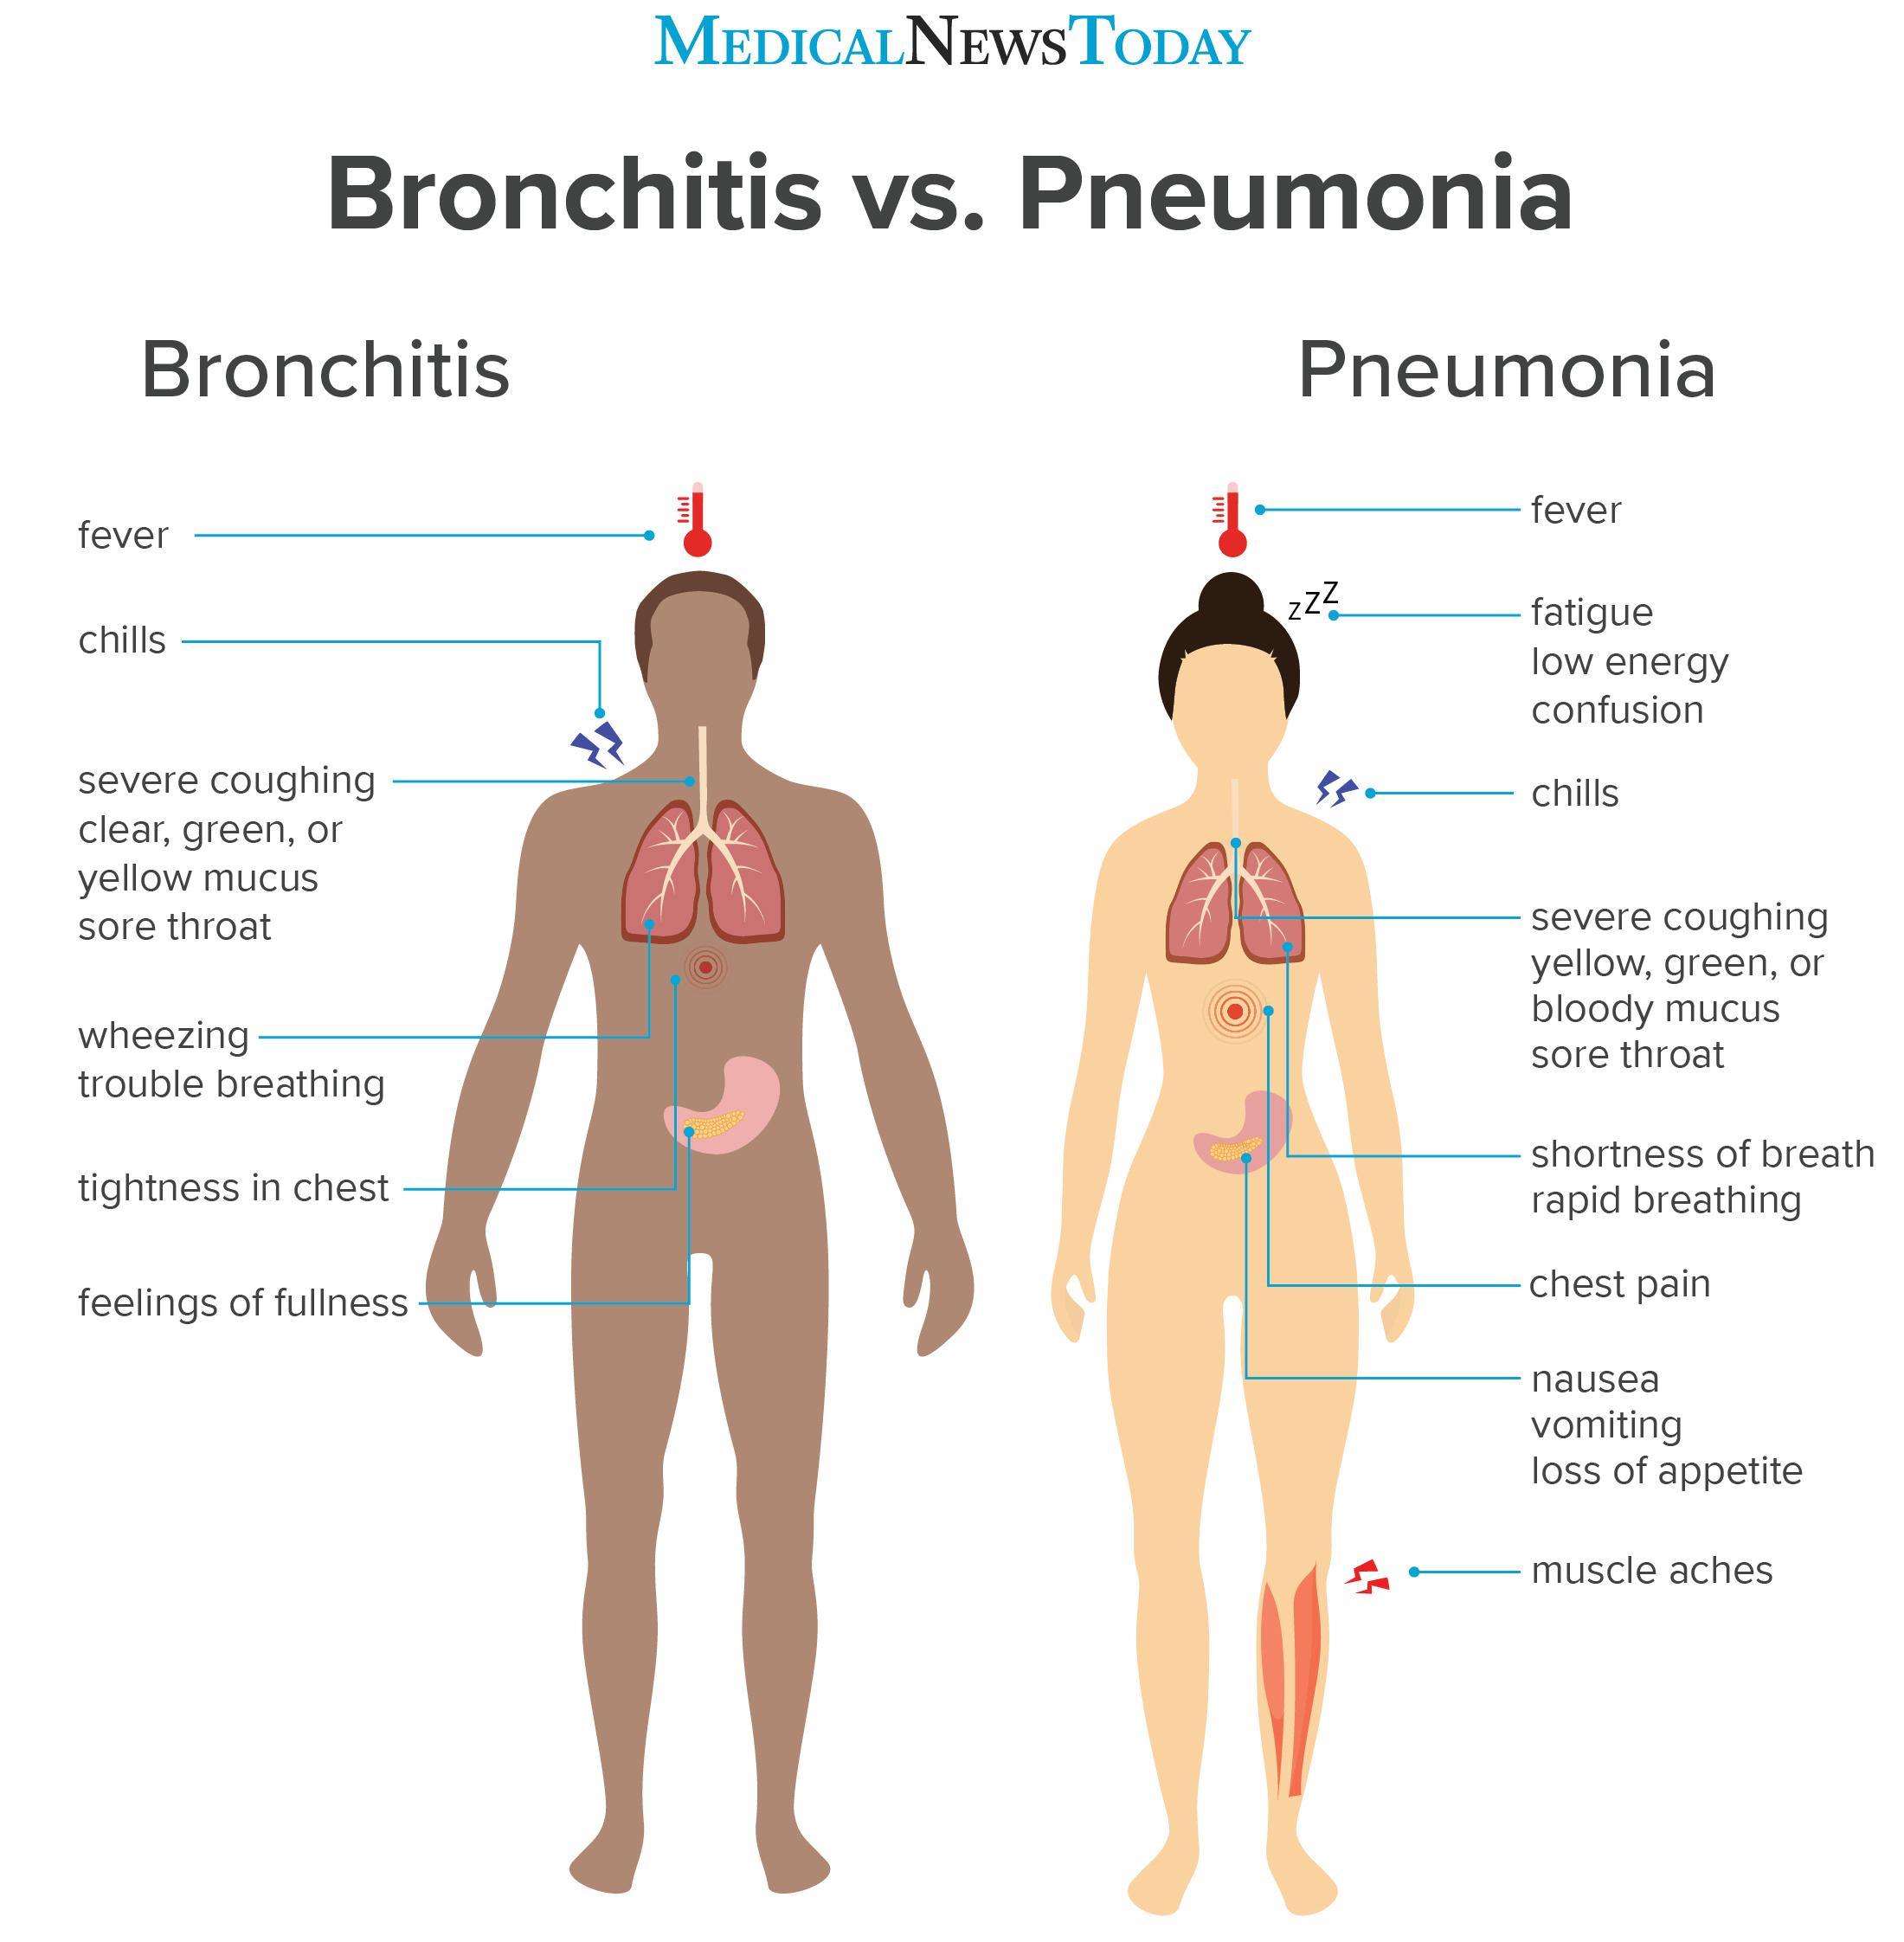 an infographic showing the symptoms of bronchitis vs Pneumonia